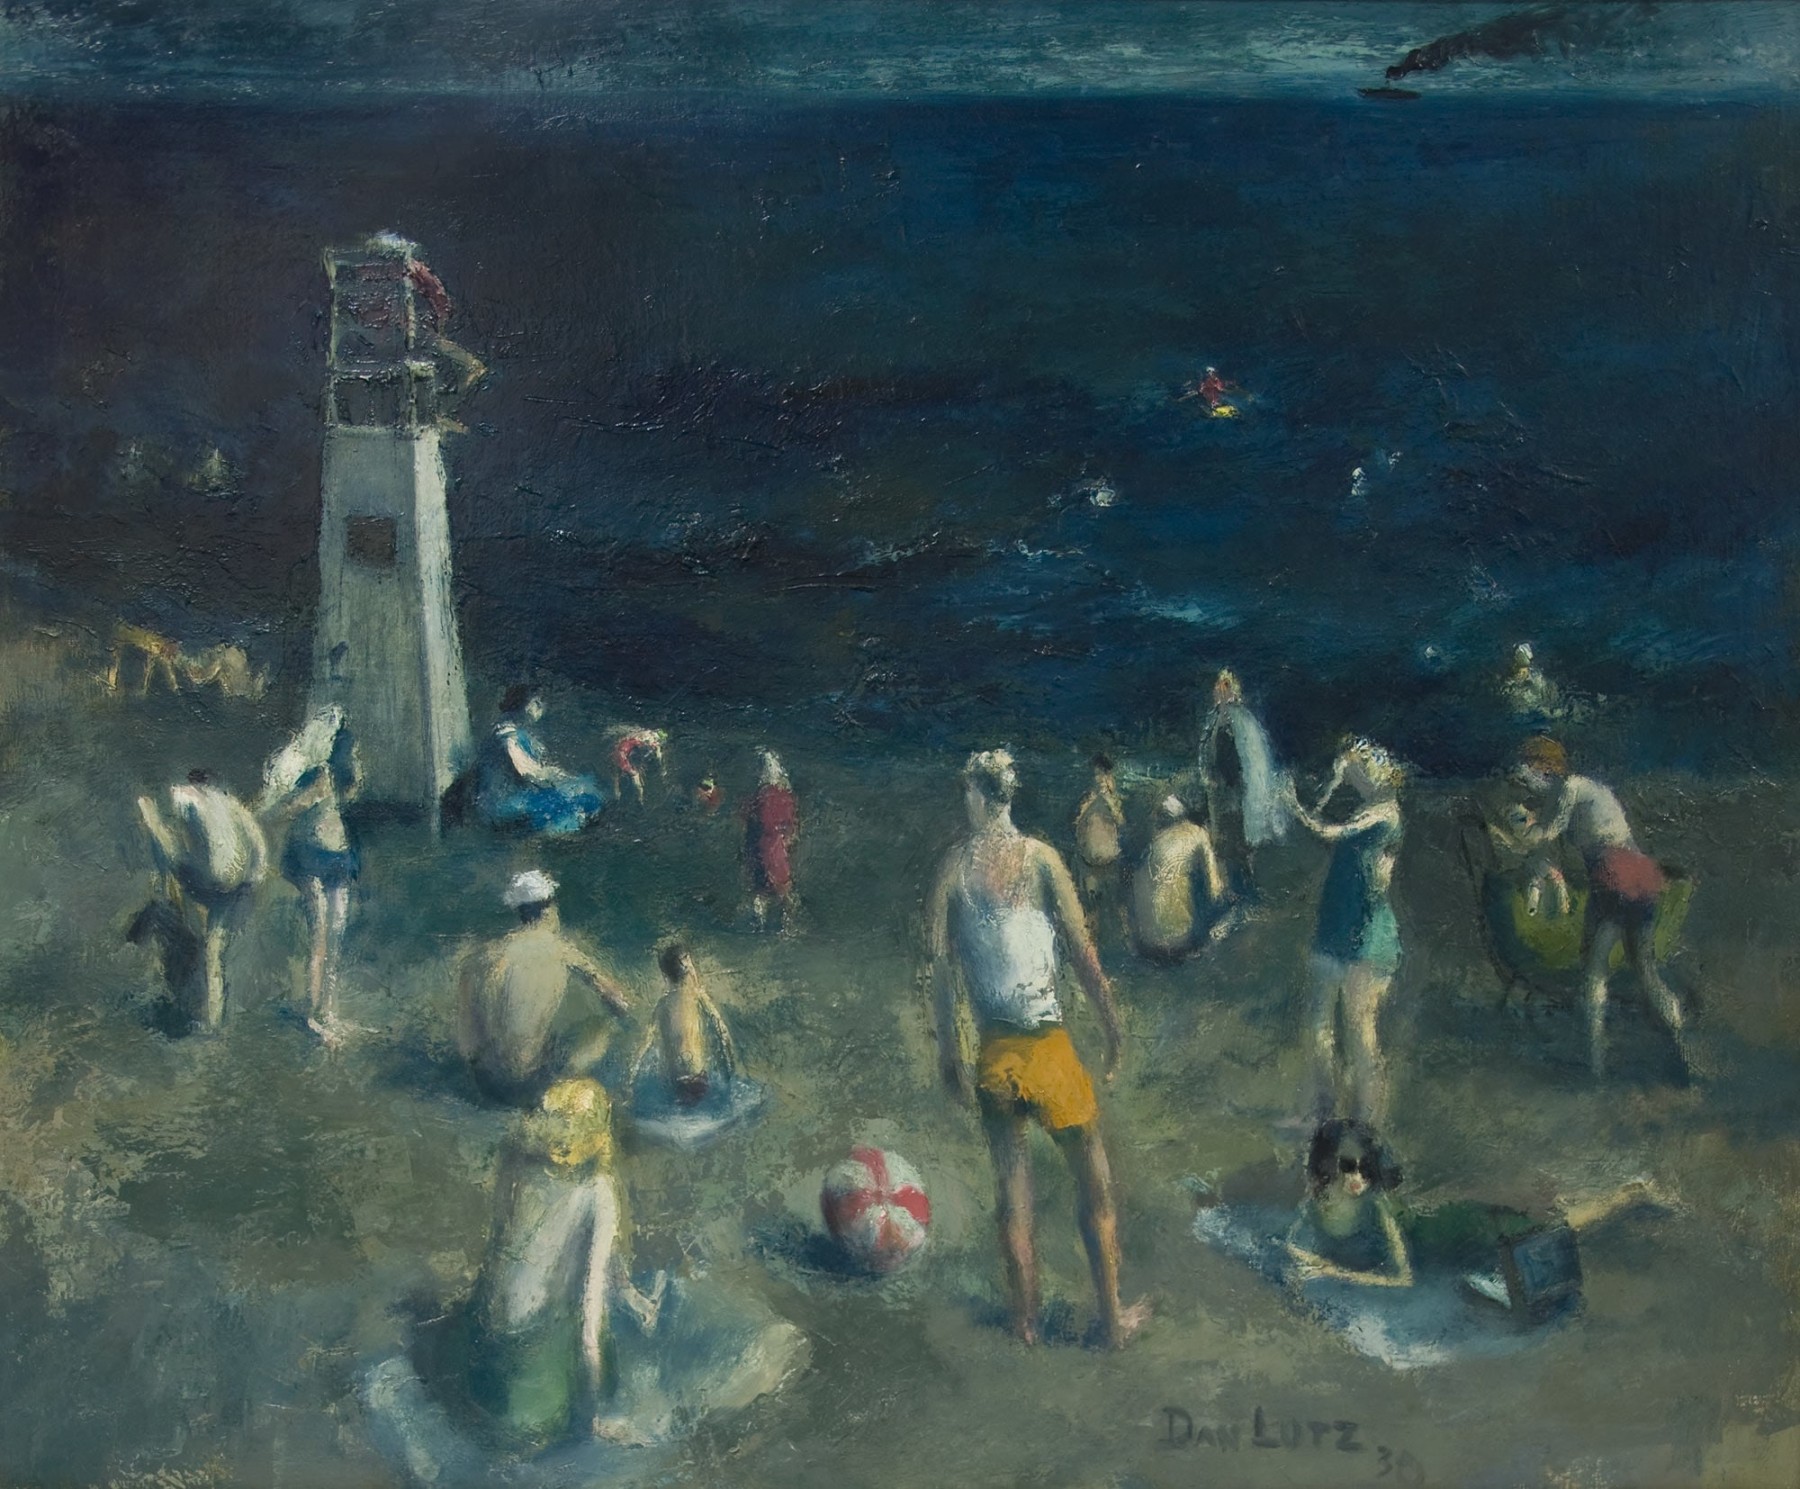 DAN LUTZ (1906-1978), Untitled (Lifeguard Tower), 1930